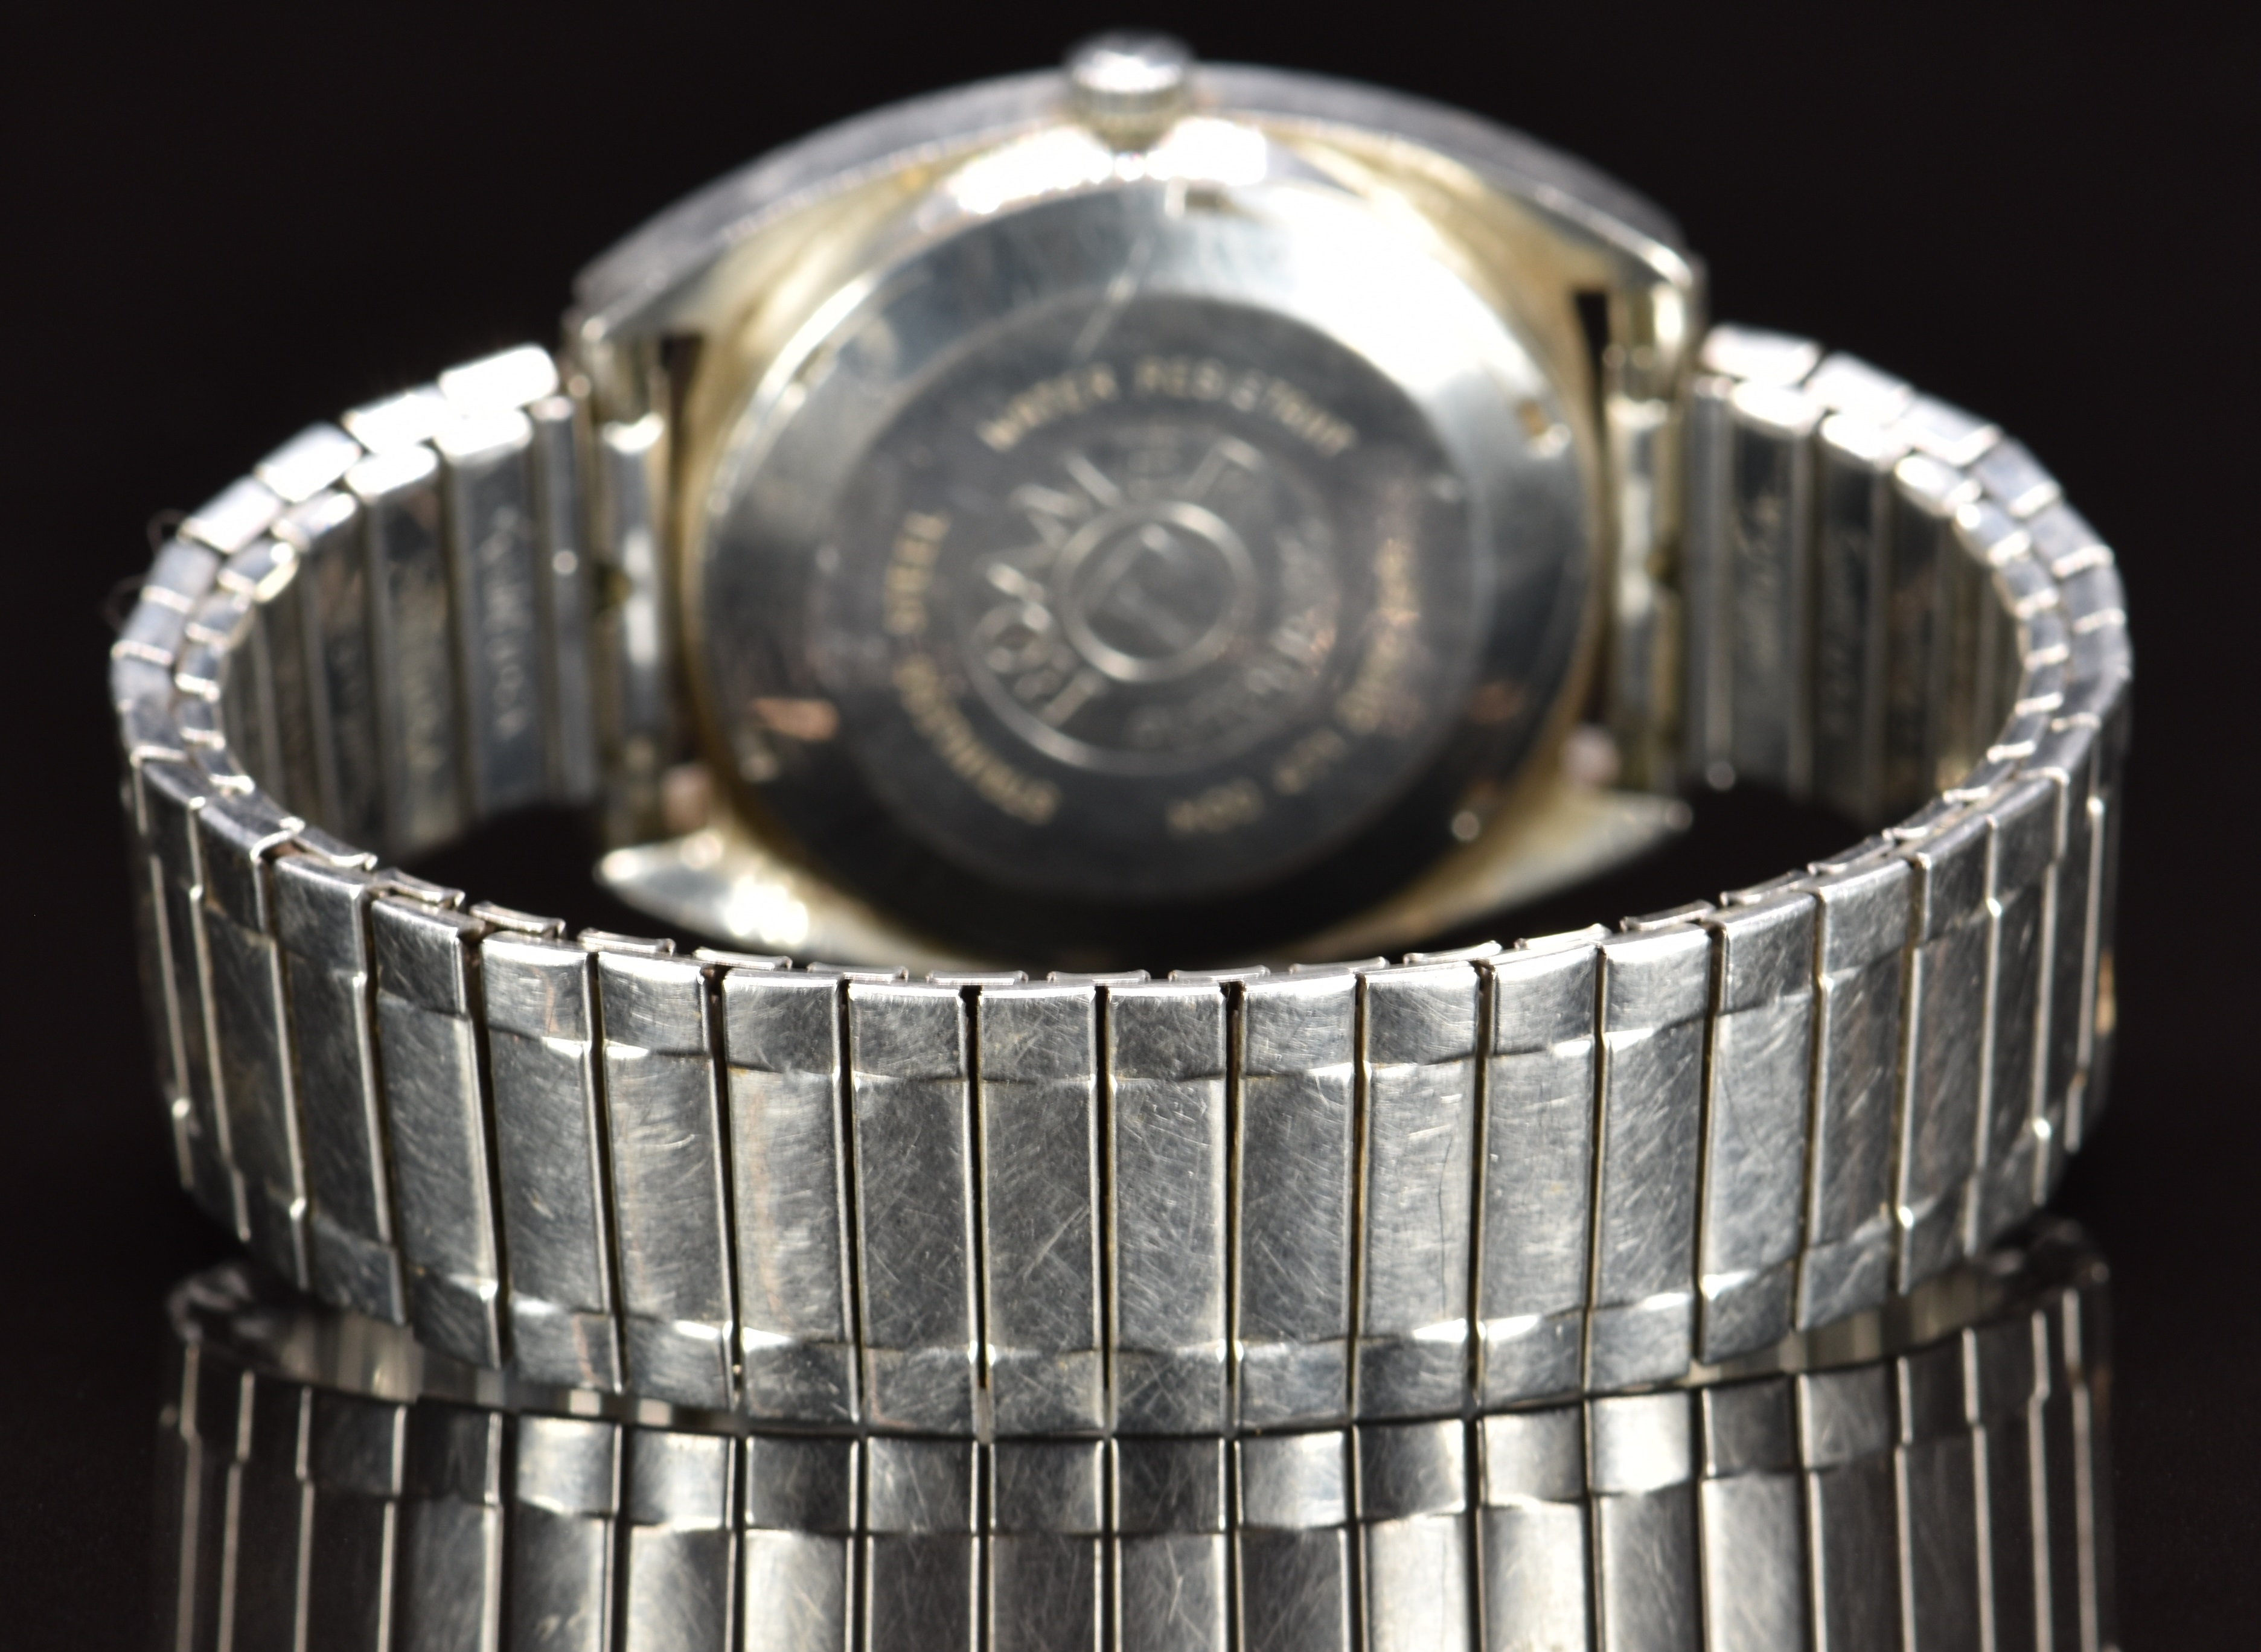 Roamer Searock gentleman’s automatic wristwatch ref. 471.2120.328 with date aperture, silver dial, - Image 5 of 5